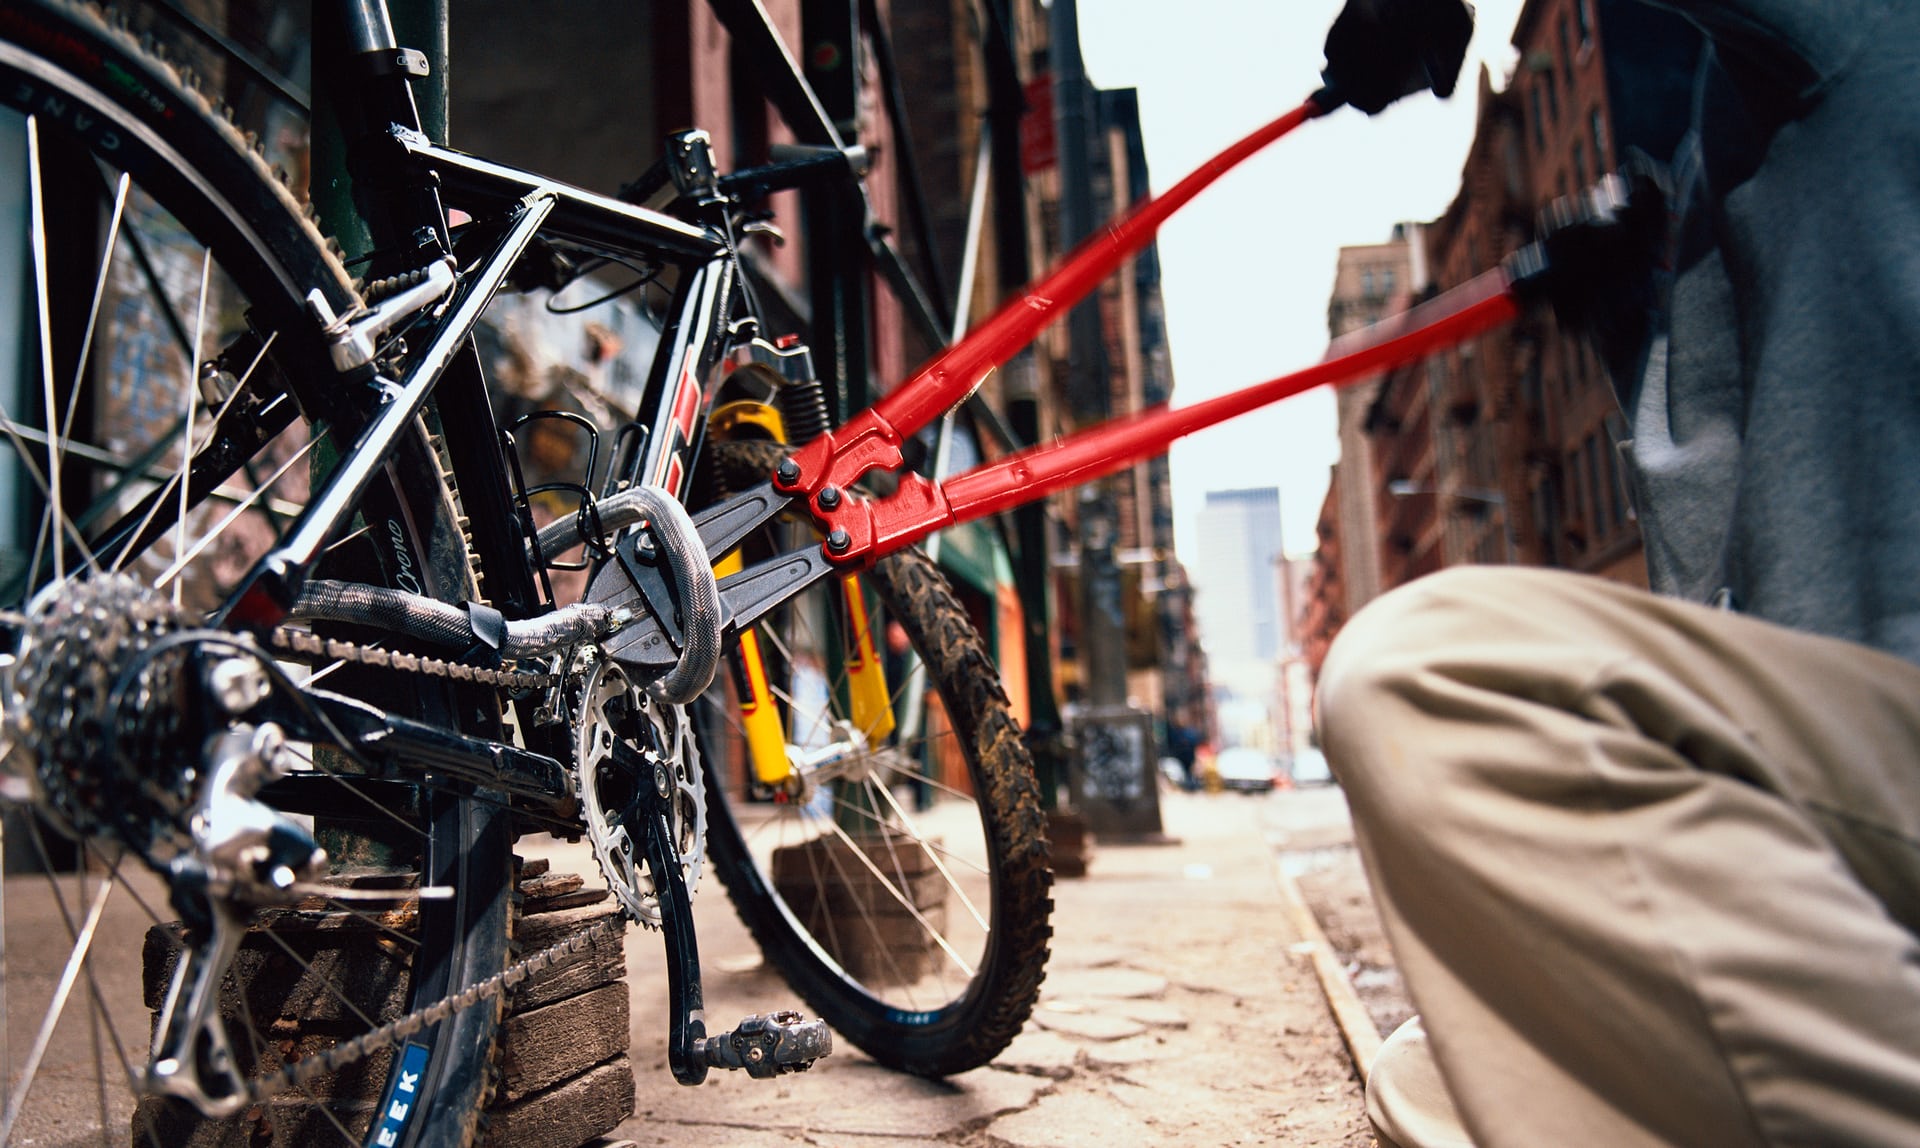 app κατά της κλοπής ποδηλάτων στο Βανκούβερ - 1